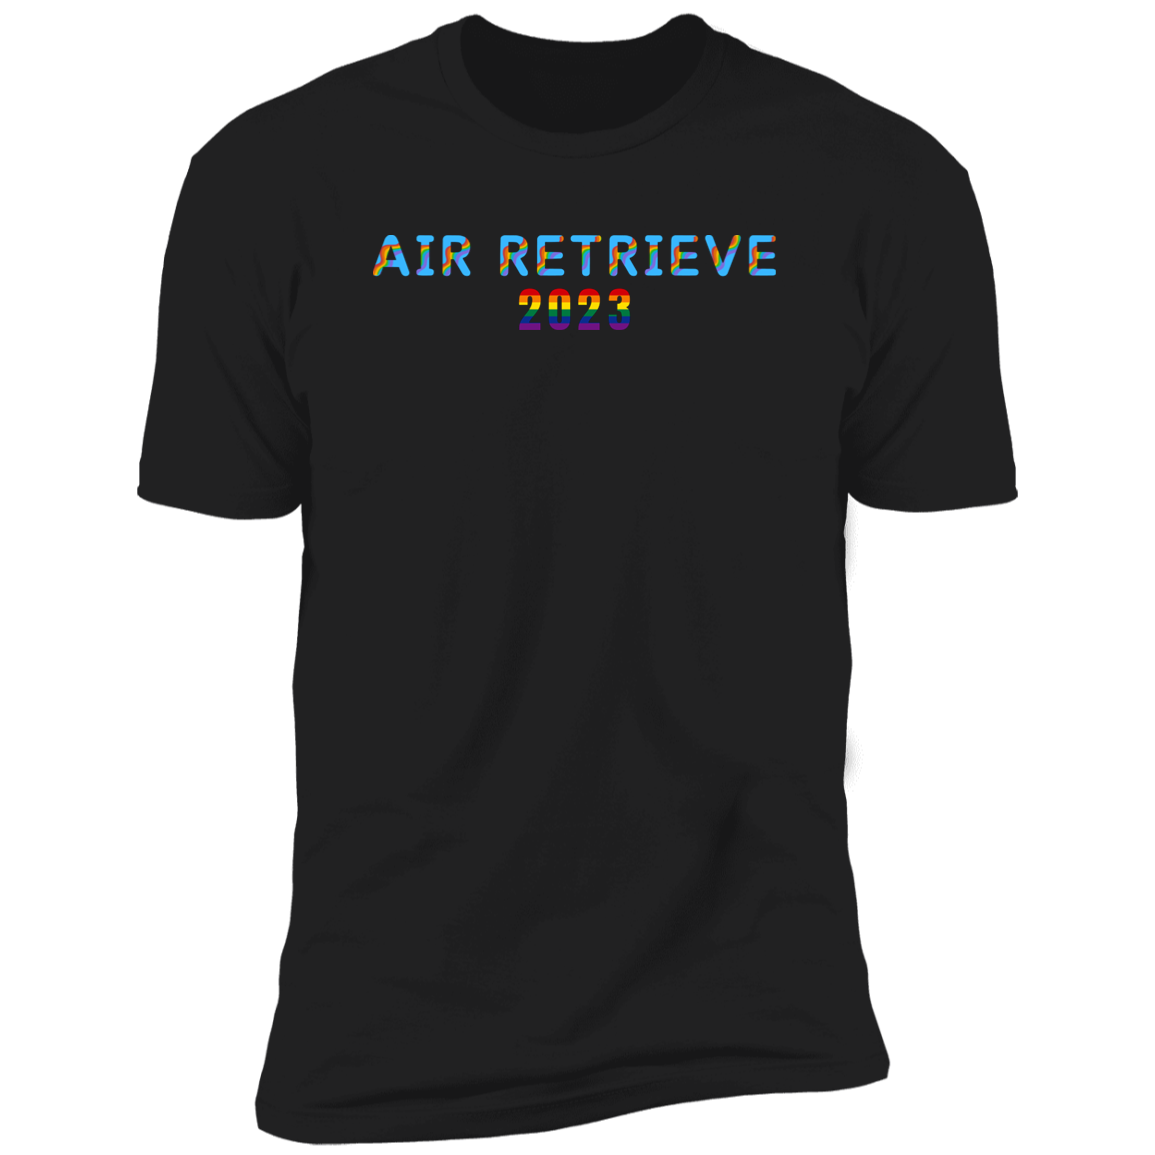 Air Retrieve 2023 Pride Dock diving t-shirt, dog pride air retrieve dock diving shirt for humans, in black